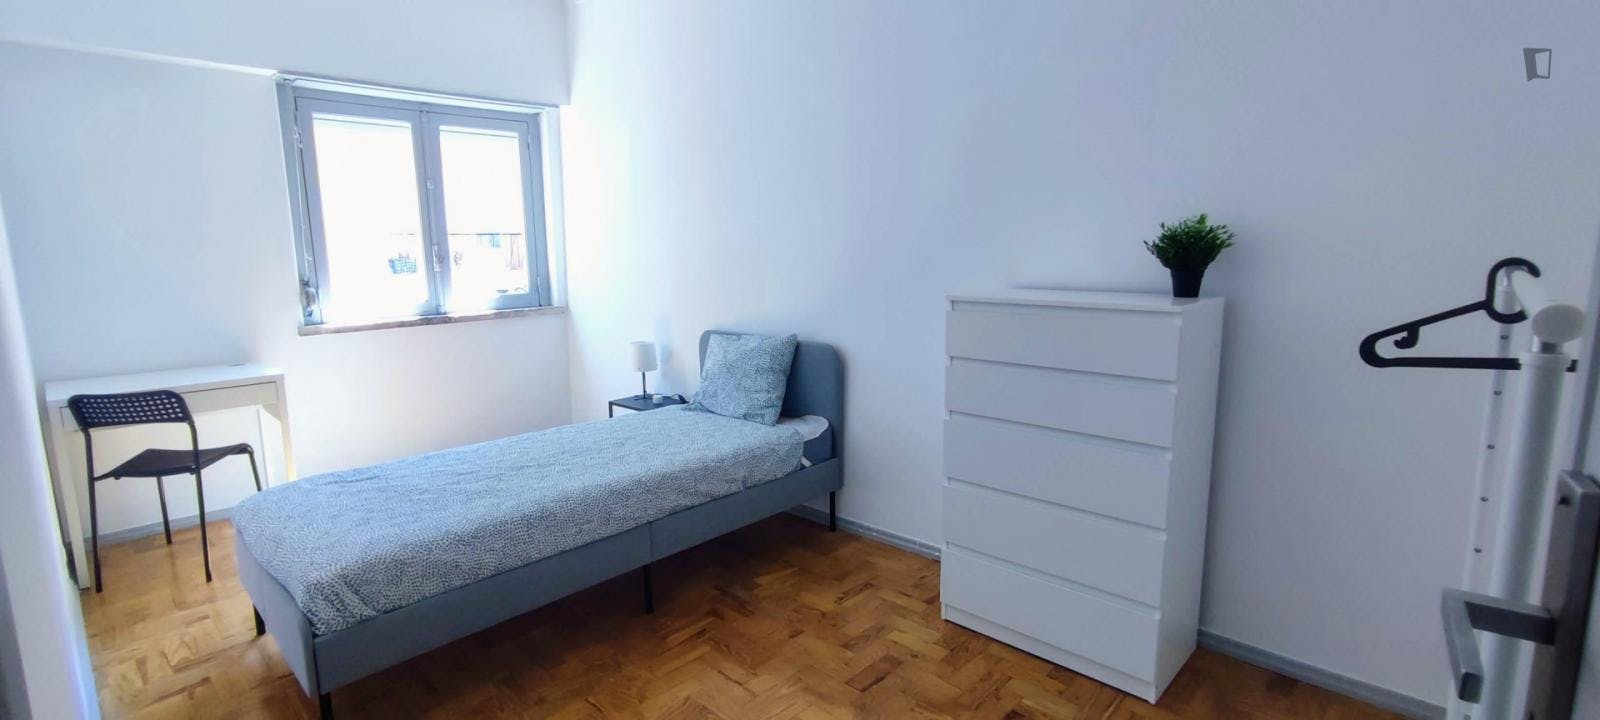 Cozy room in a 4-bedroom apartment